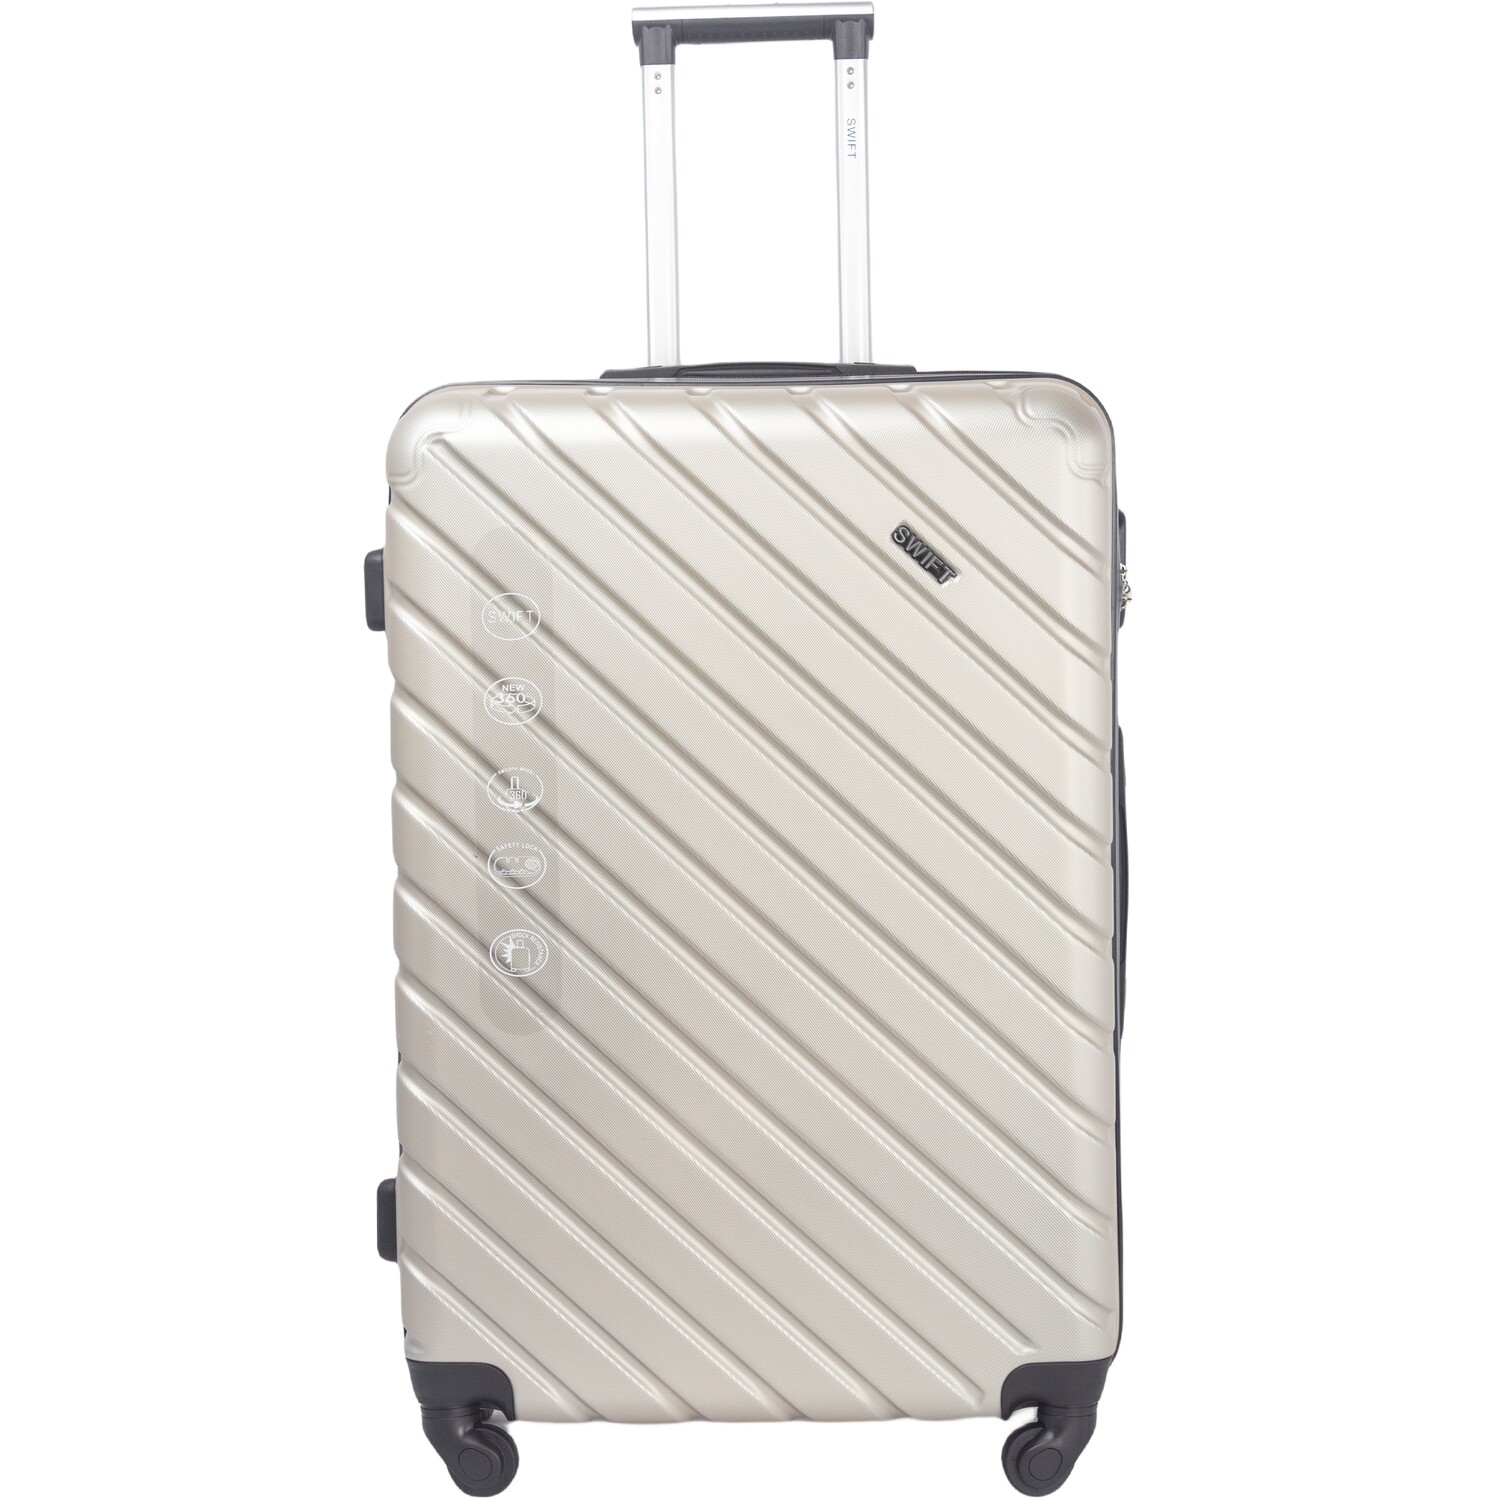 Swift Astral Suitcase - Beige  / Cabin Case Image 1